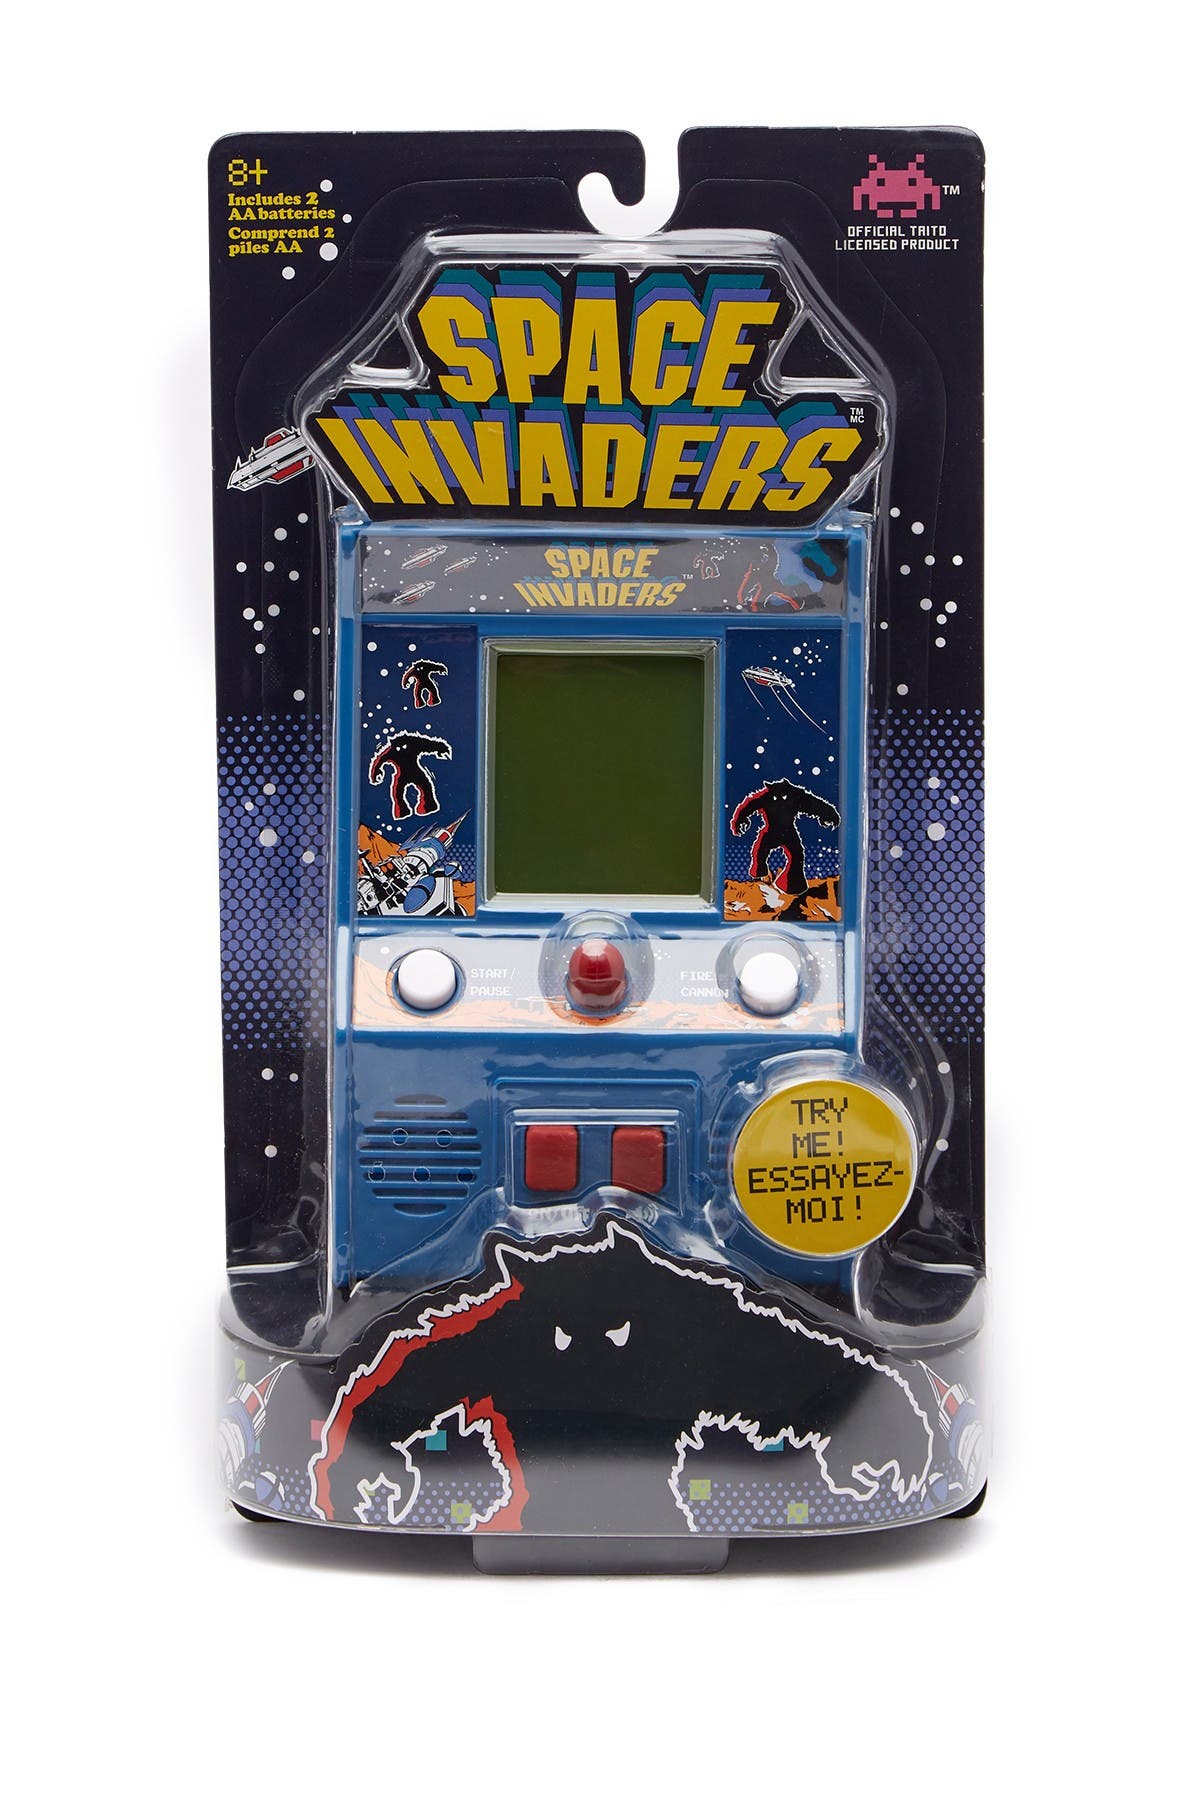 space invaders retro arcade game